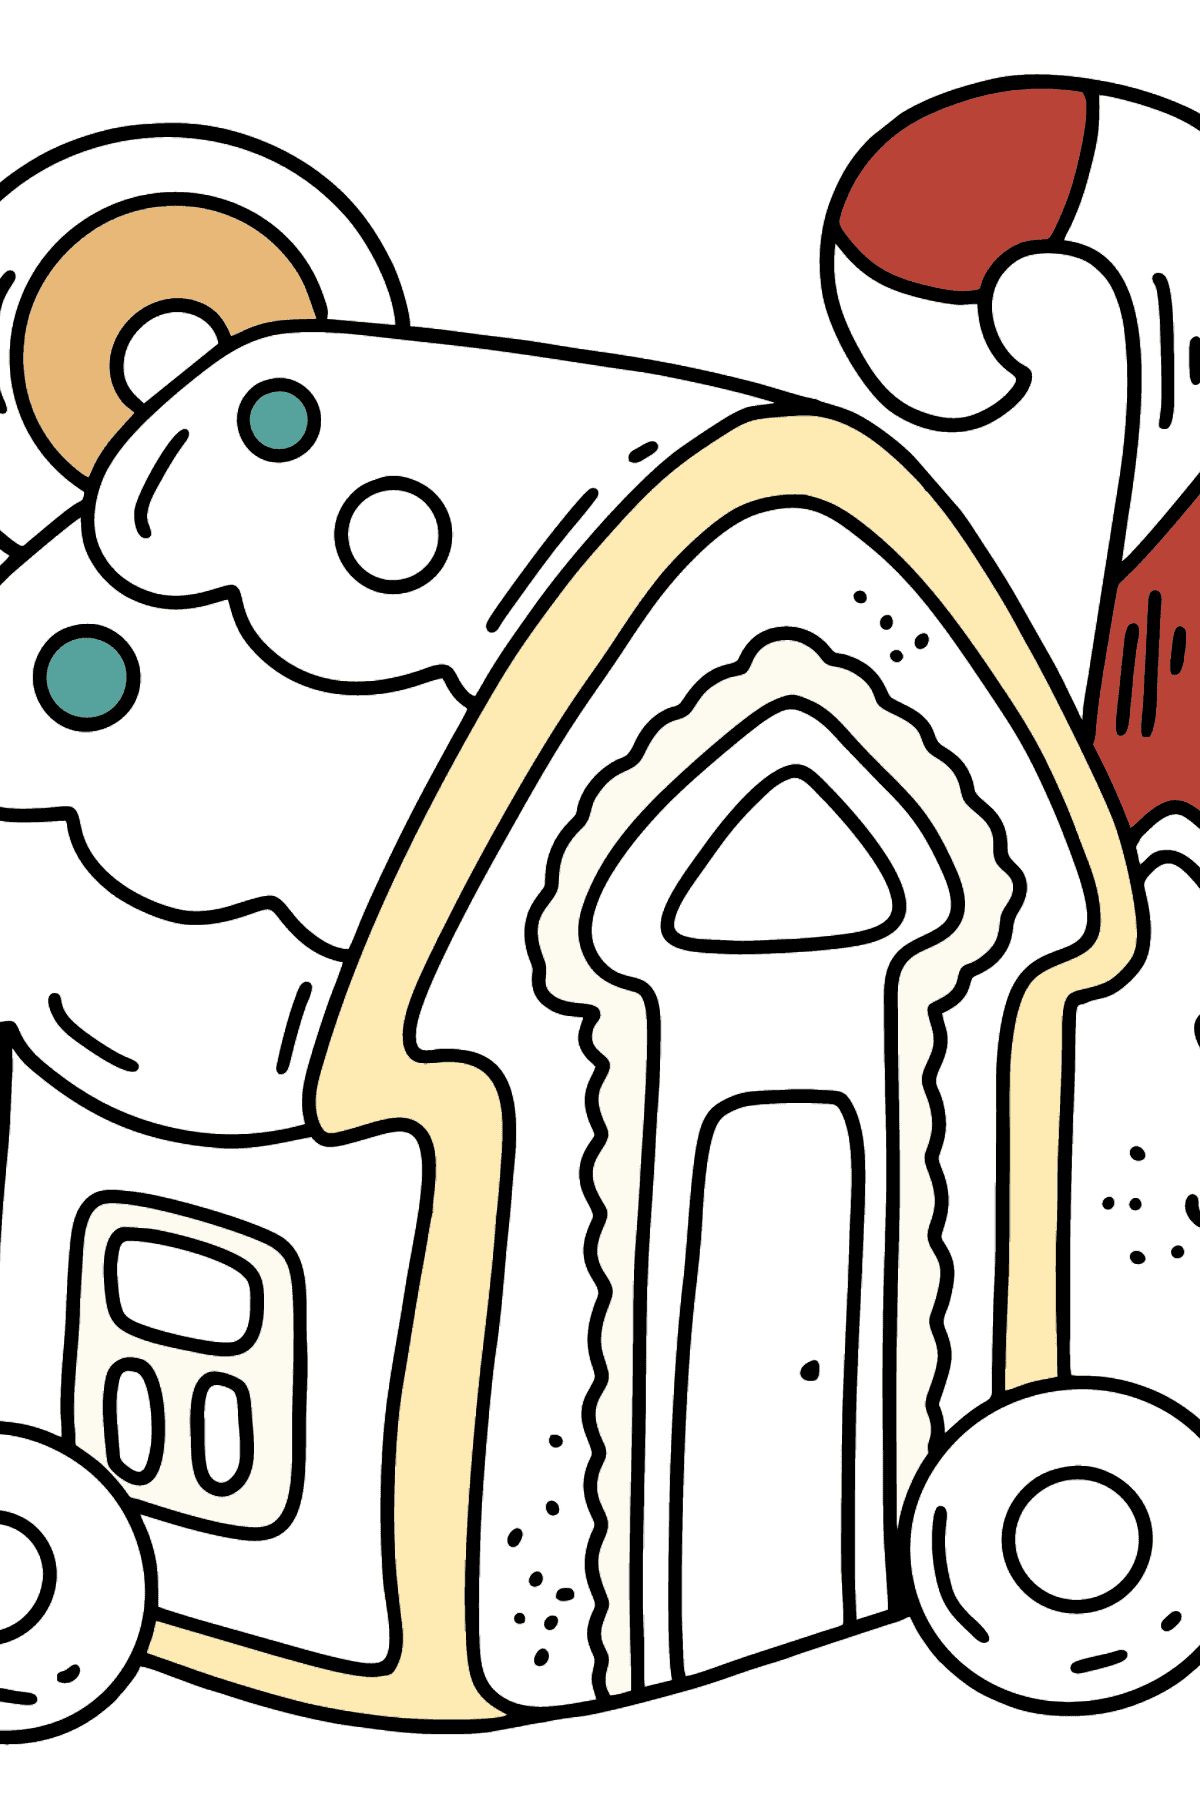 Dibujo para colorear de Casa de pan de jengibre con bastón de caramel - Dibujos para Colorear para Niños